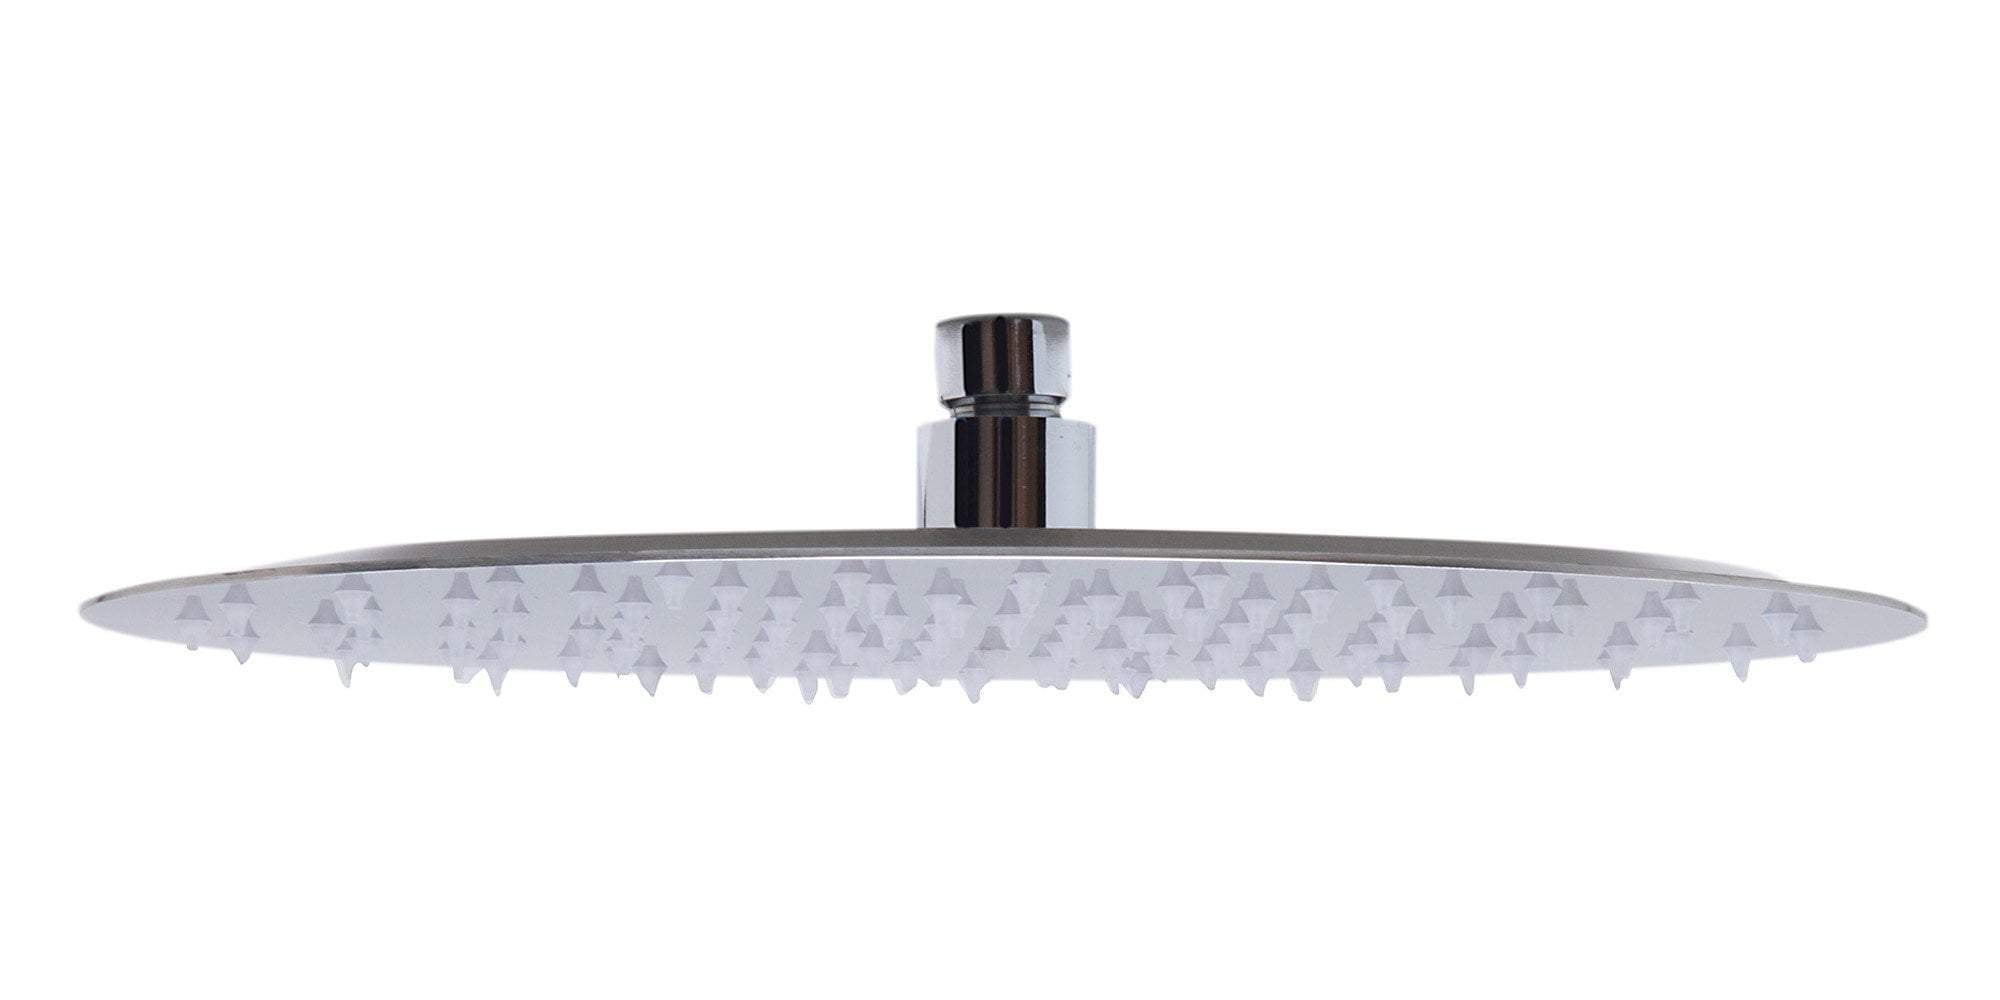 ALFI brand RAIN128-BSS 12" Oval Brushed Solid Stainless Steel Ultra Thin Rain Shower Head